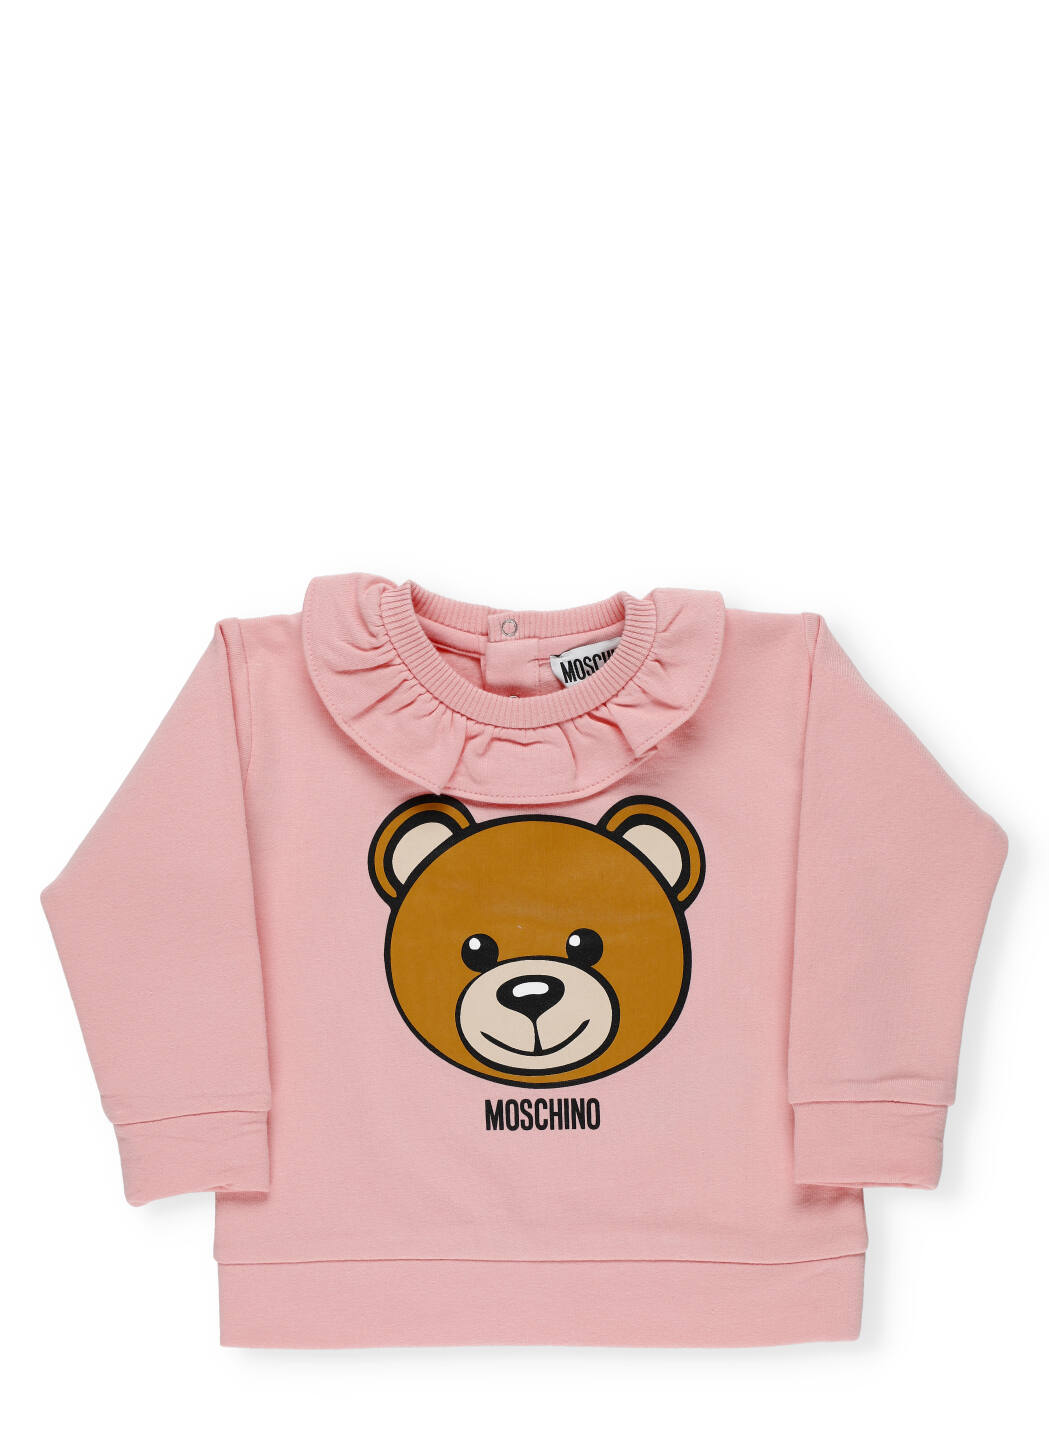 Moschino Teddy Bear Sweatshirt With Rouches